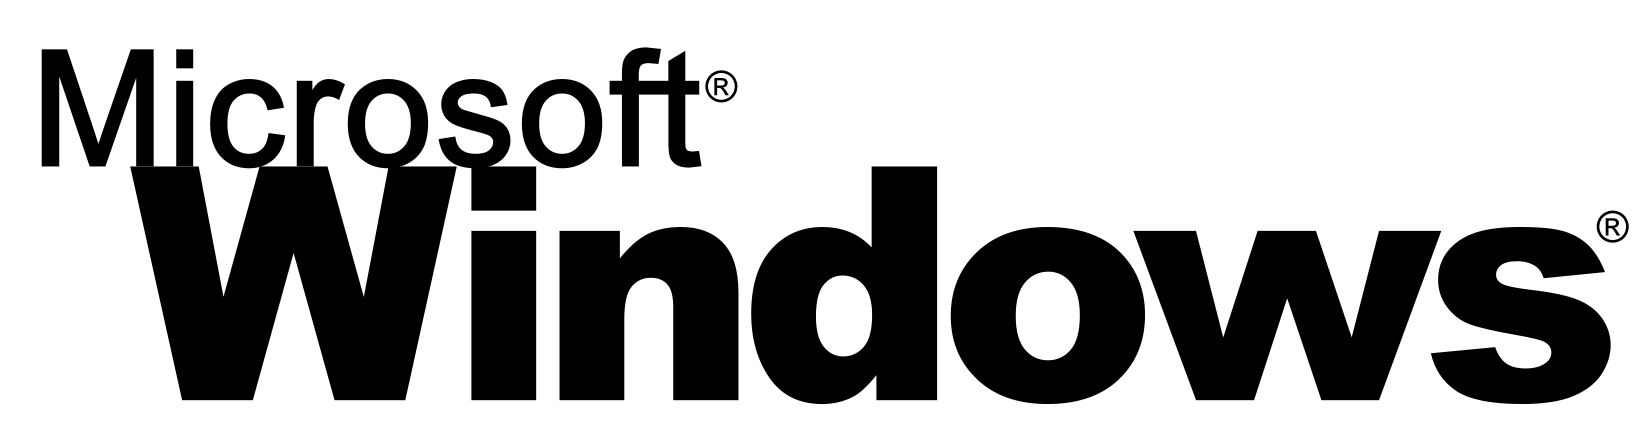 Microsoft Windows 95 Logo - Image - 2000px-Windows 95 logo.svg.png | Logopedia | FANDOM powered ...